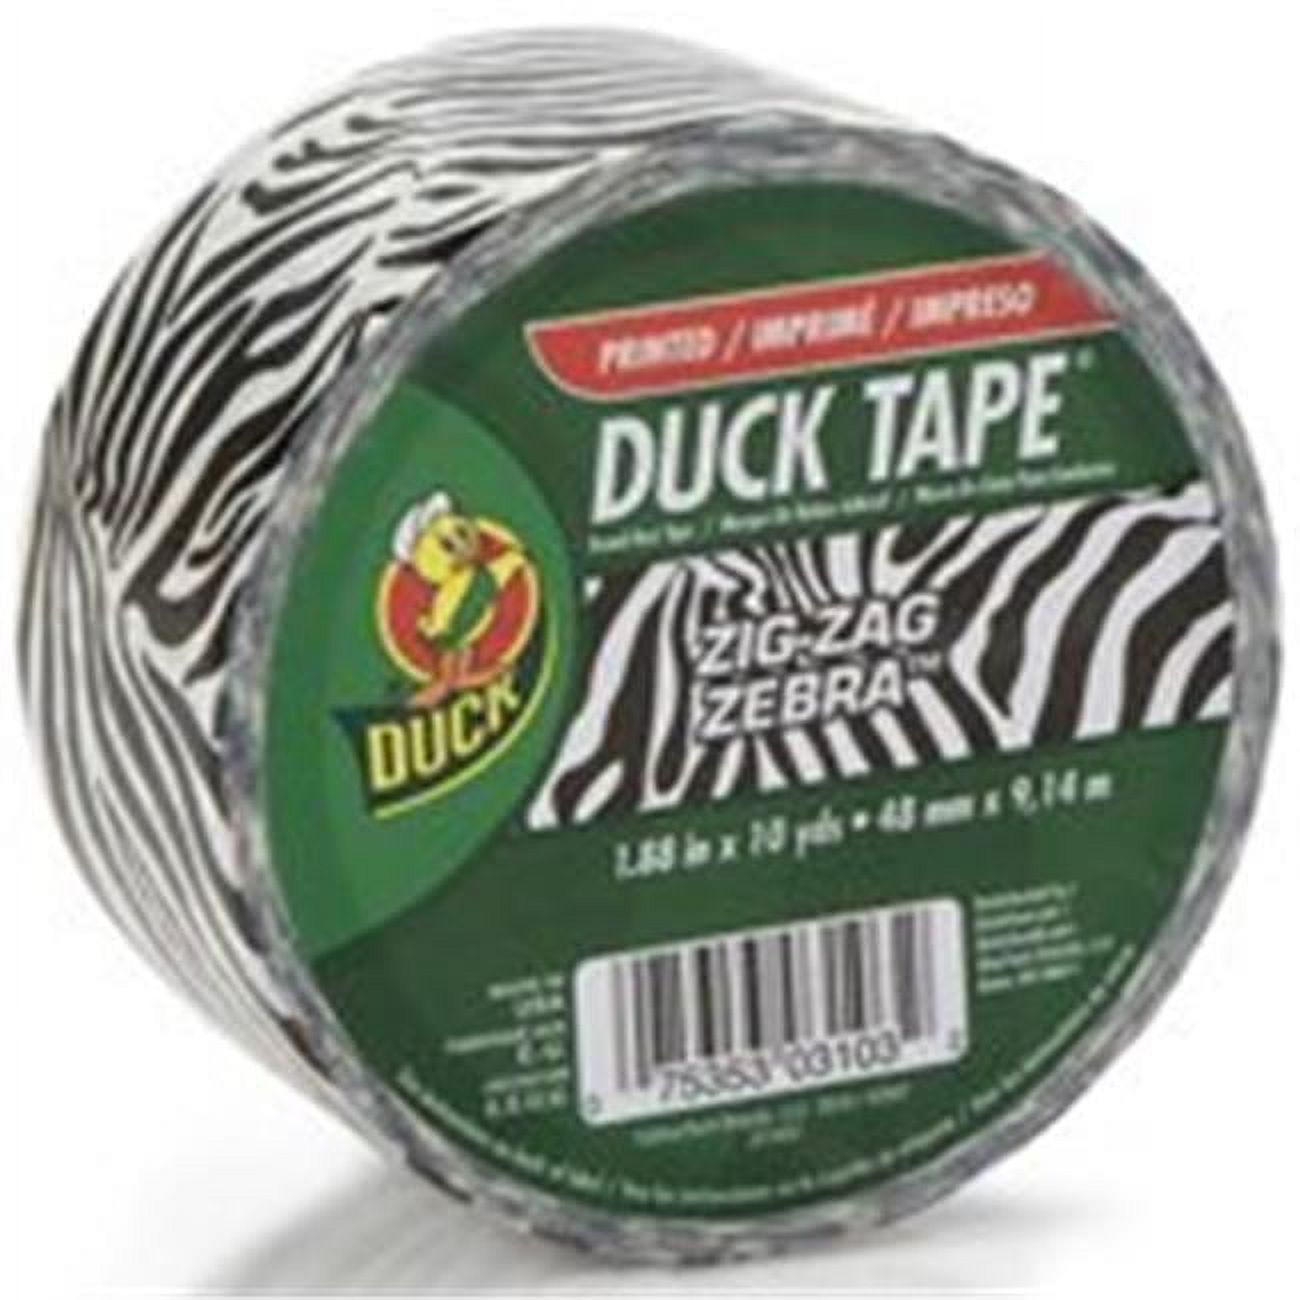 Shurtech Brands 280110 1.88 In. x 10 Yards. Zebra Duck Tape - image 1 of 4